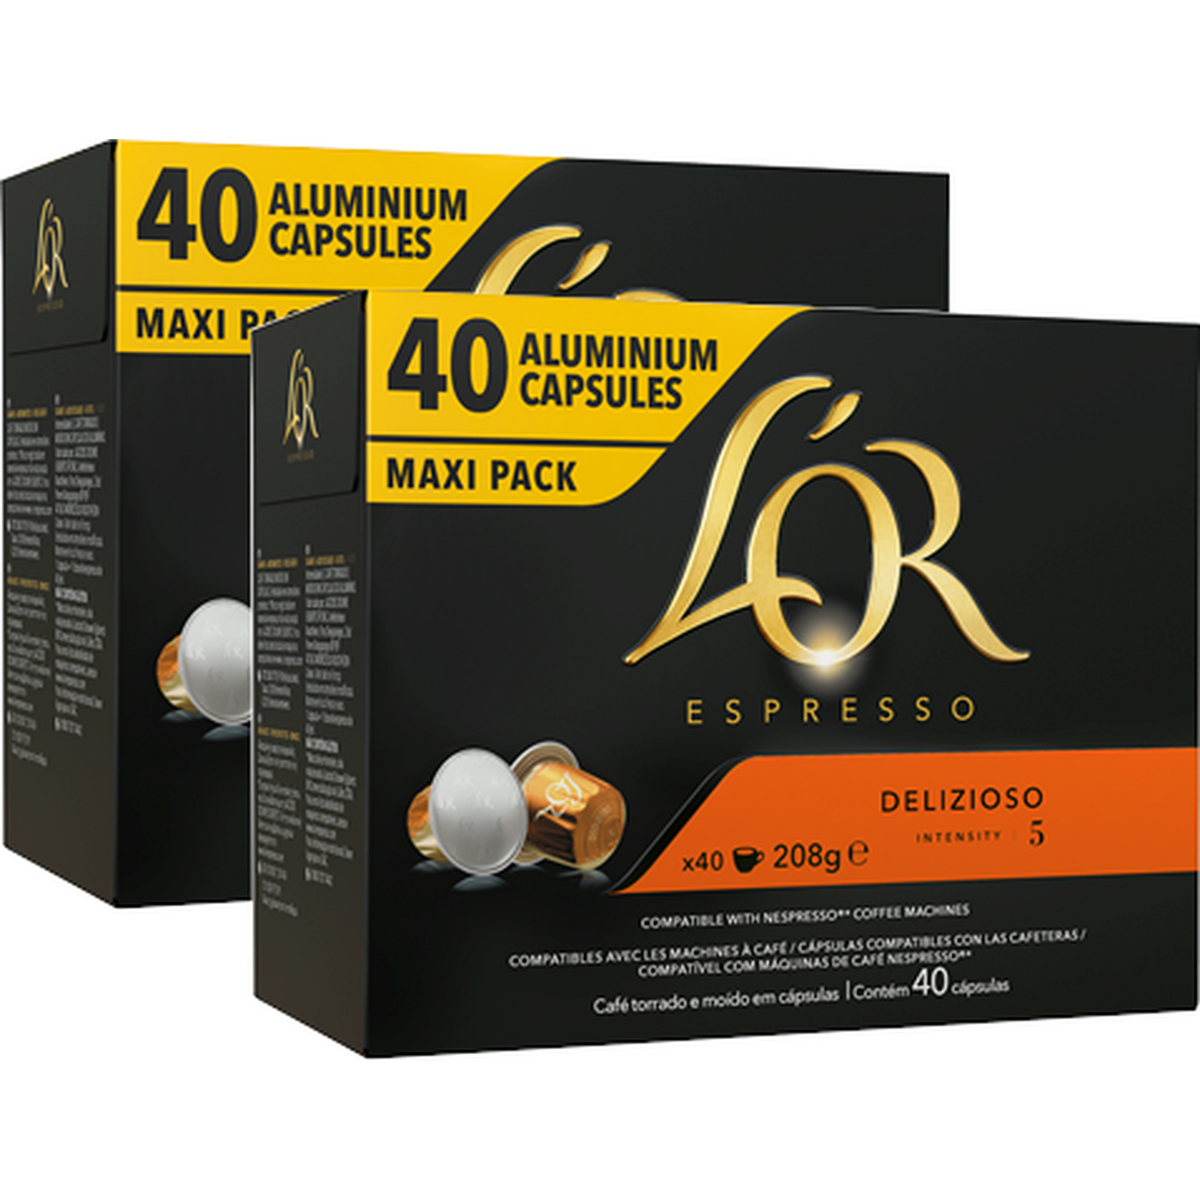 L'OR Espresso capsules de café Delizioso intensité 5 compatibles Nespresso  3x40 capsules pas cher 